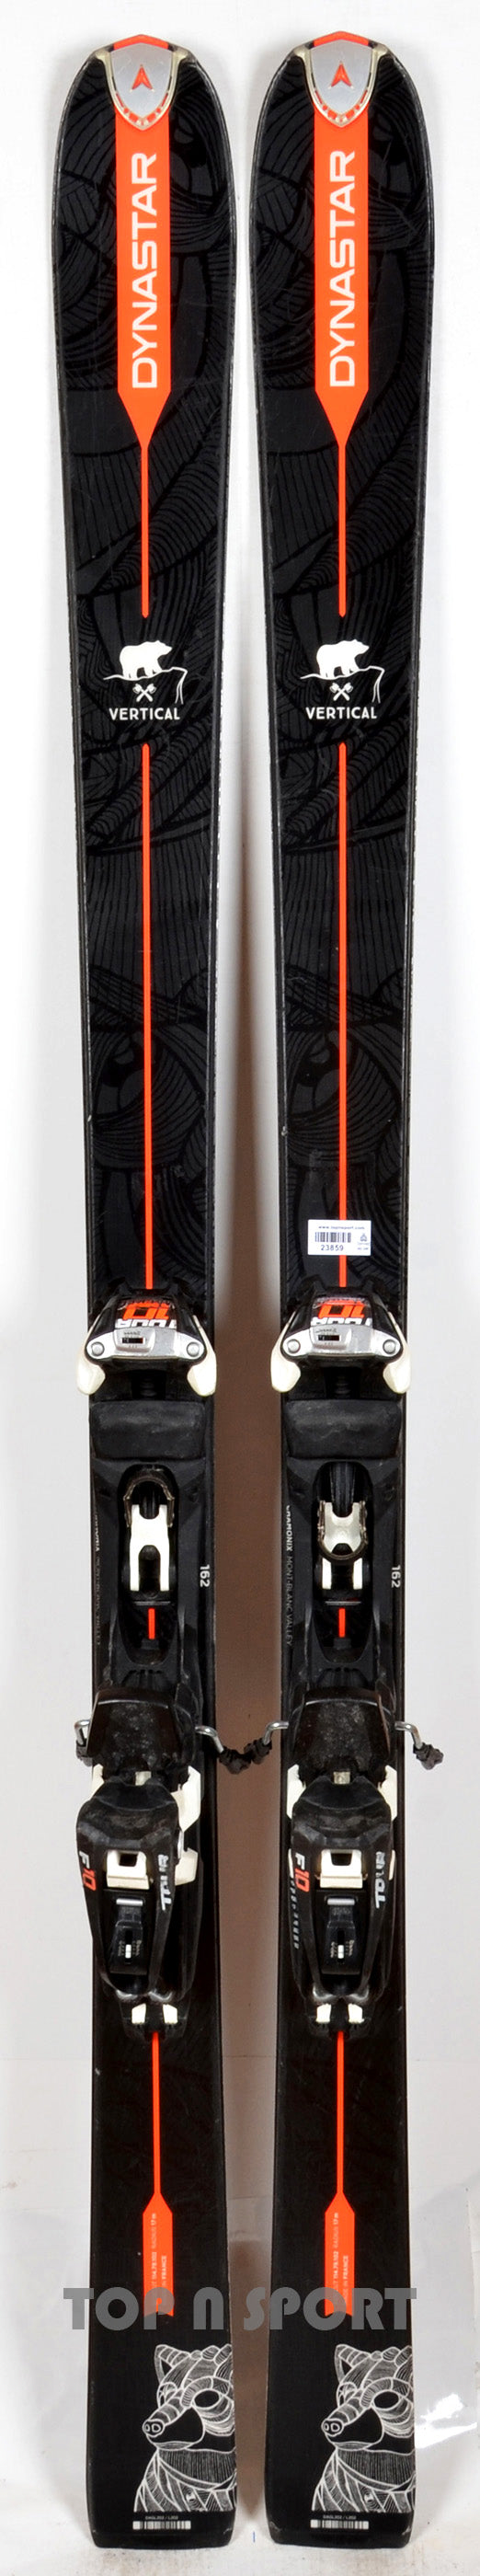 Dynastar VERTICAL BEAR black + Fix Marker TOUR F10 - skis d'occasion